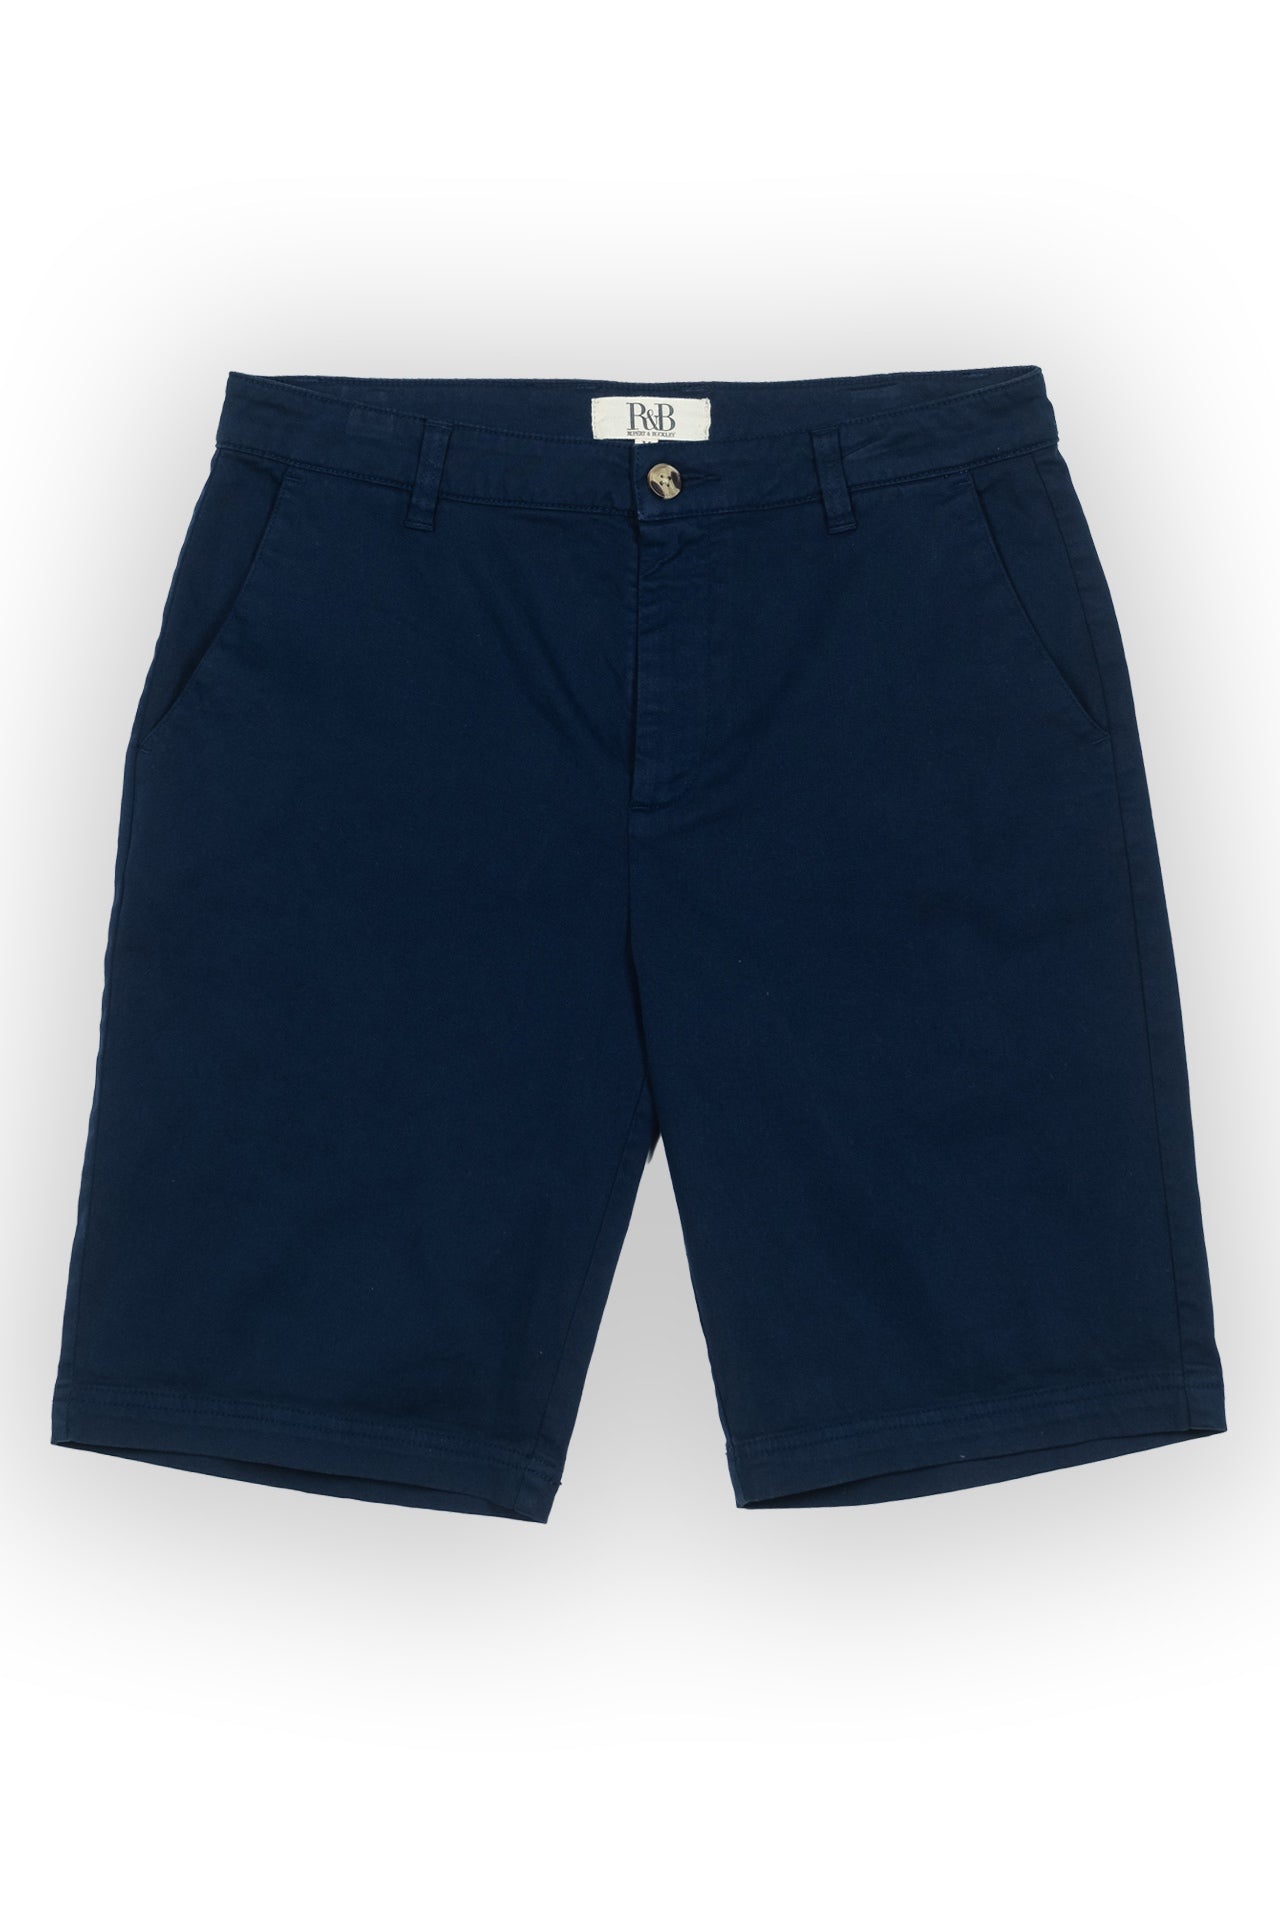 Spencer Navy Chino Shorts - Rupert and Buckley - Shorts